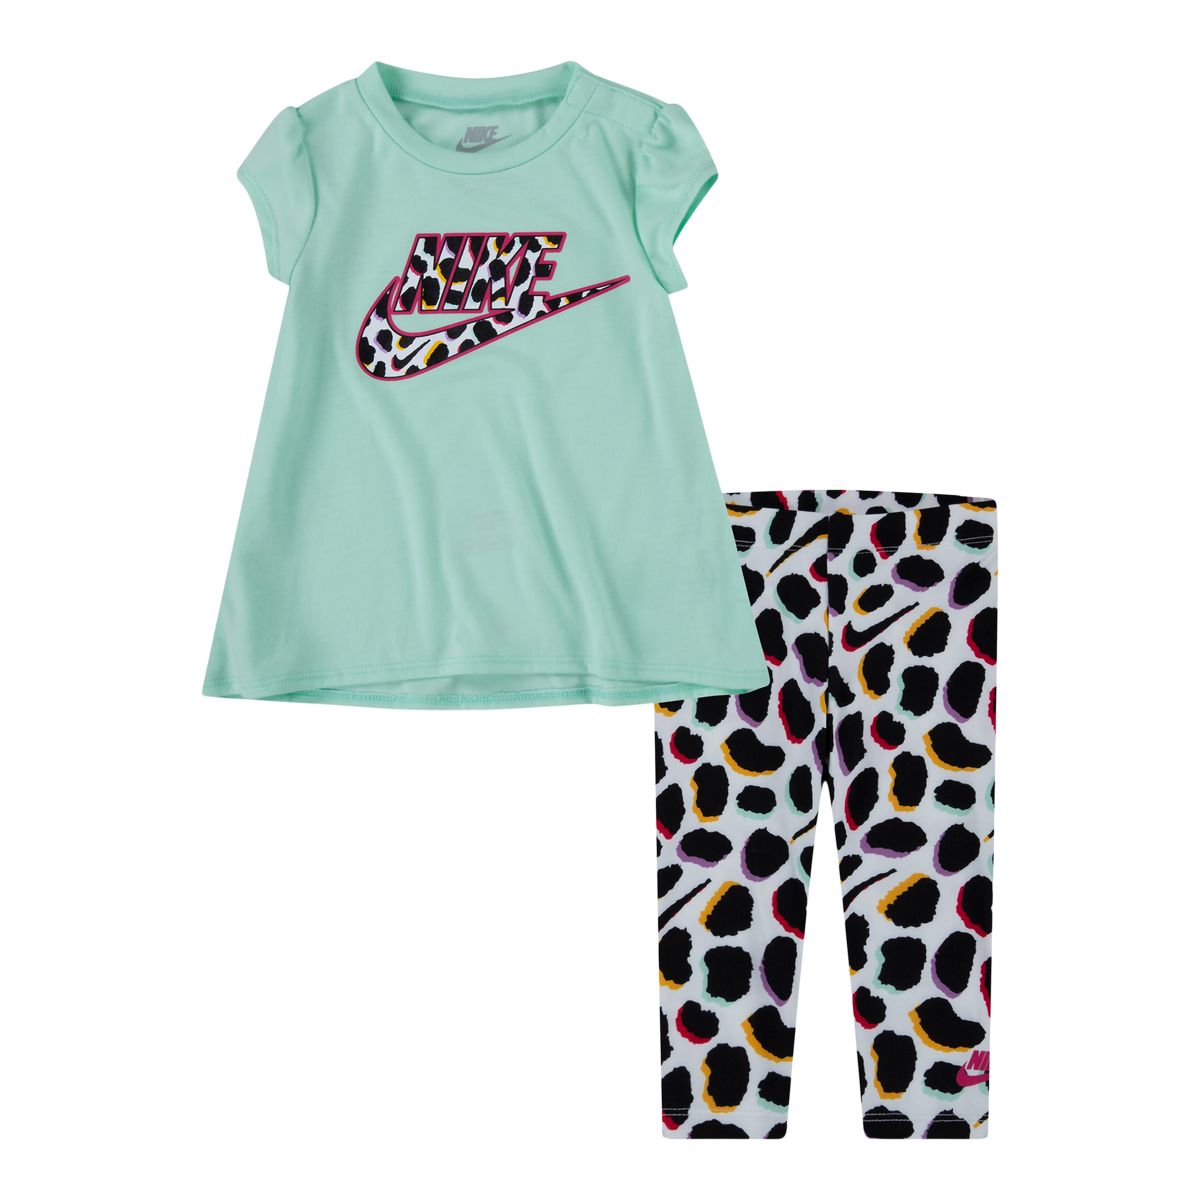 Nike Toddler Girls' 2-4 Tunic and All Over Print Legging Set